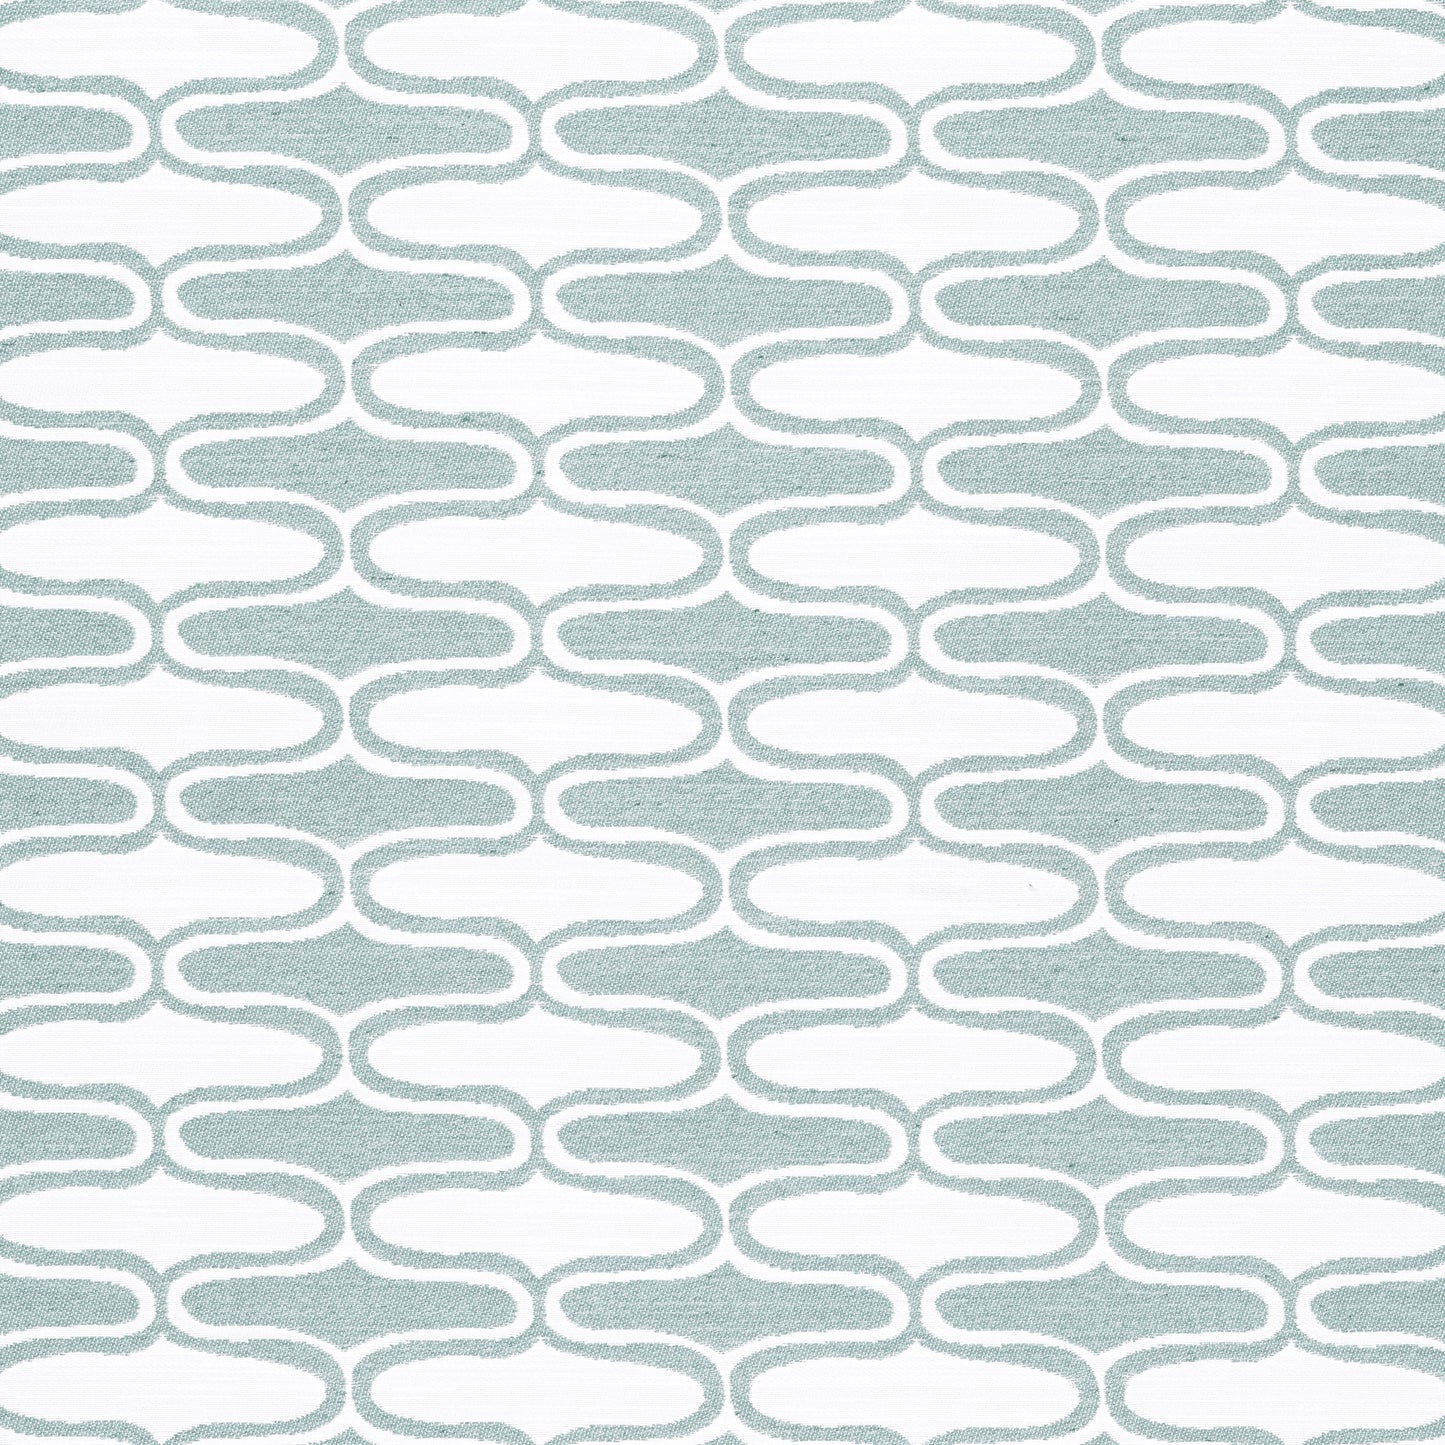 Purchase Thibaut Fabric Item W8530 pattern name Saraband color Seafoam